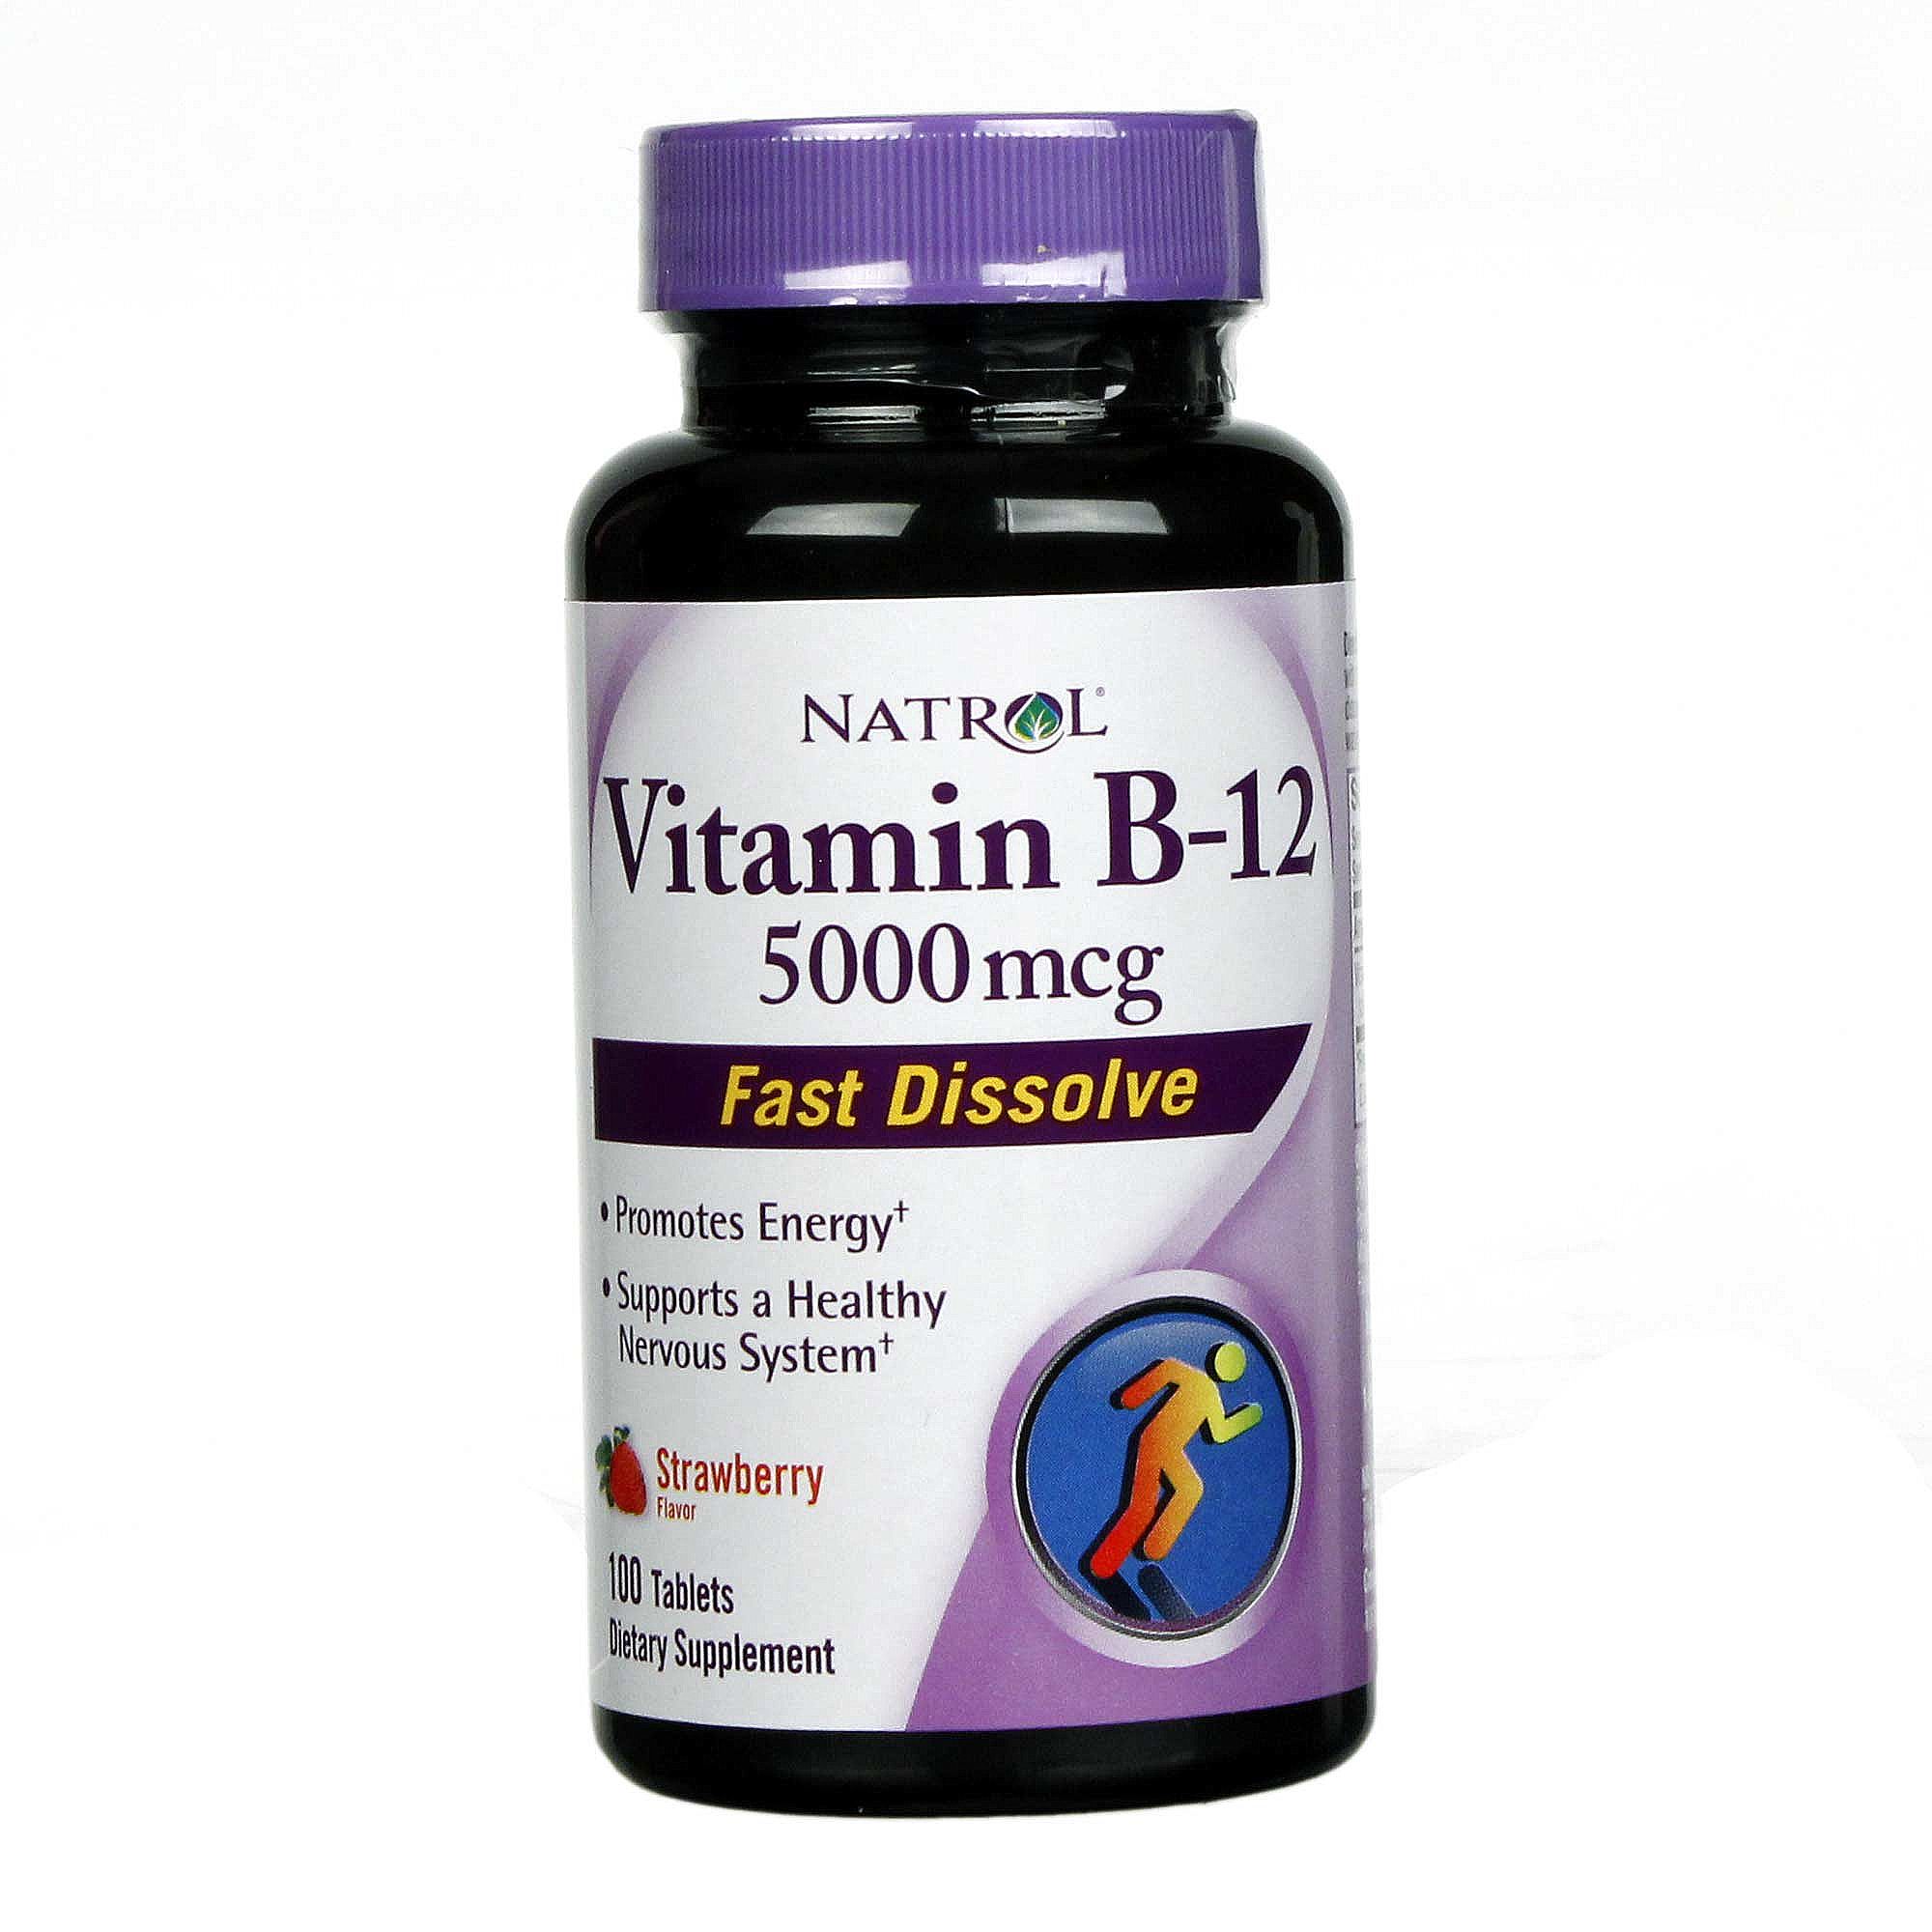 Natrol Vitamin B-12